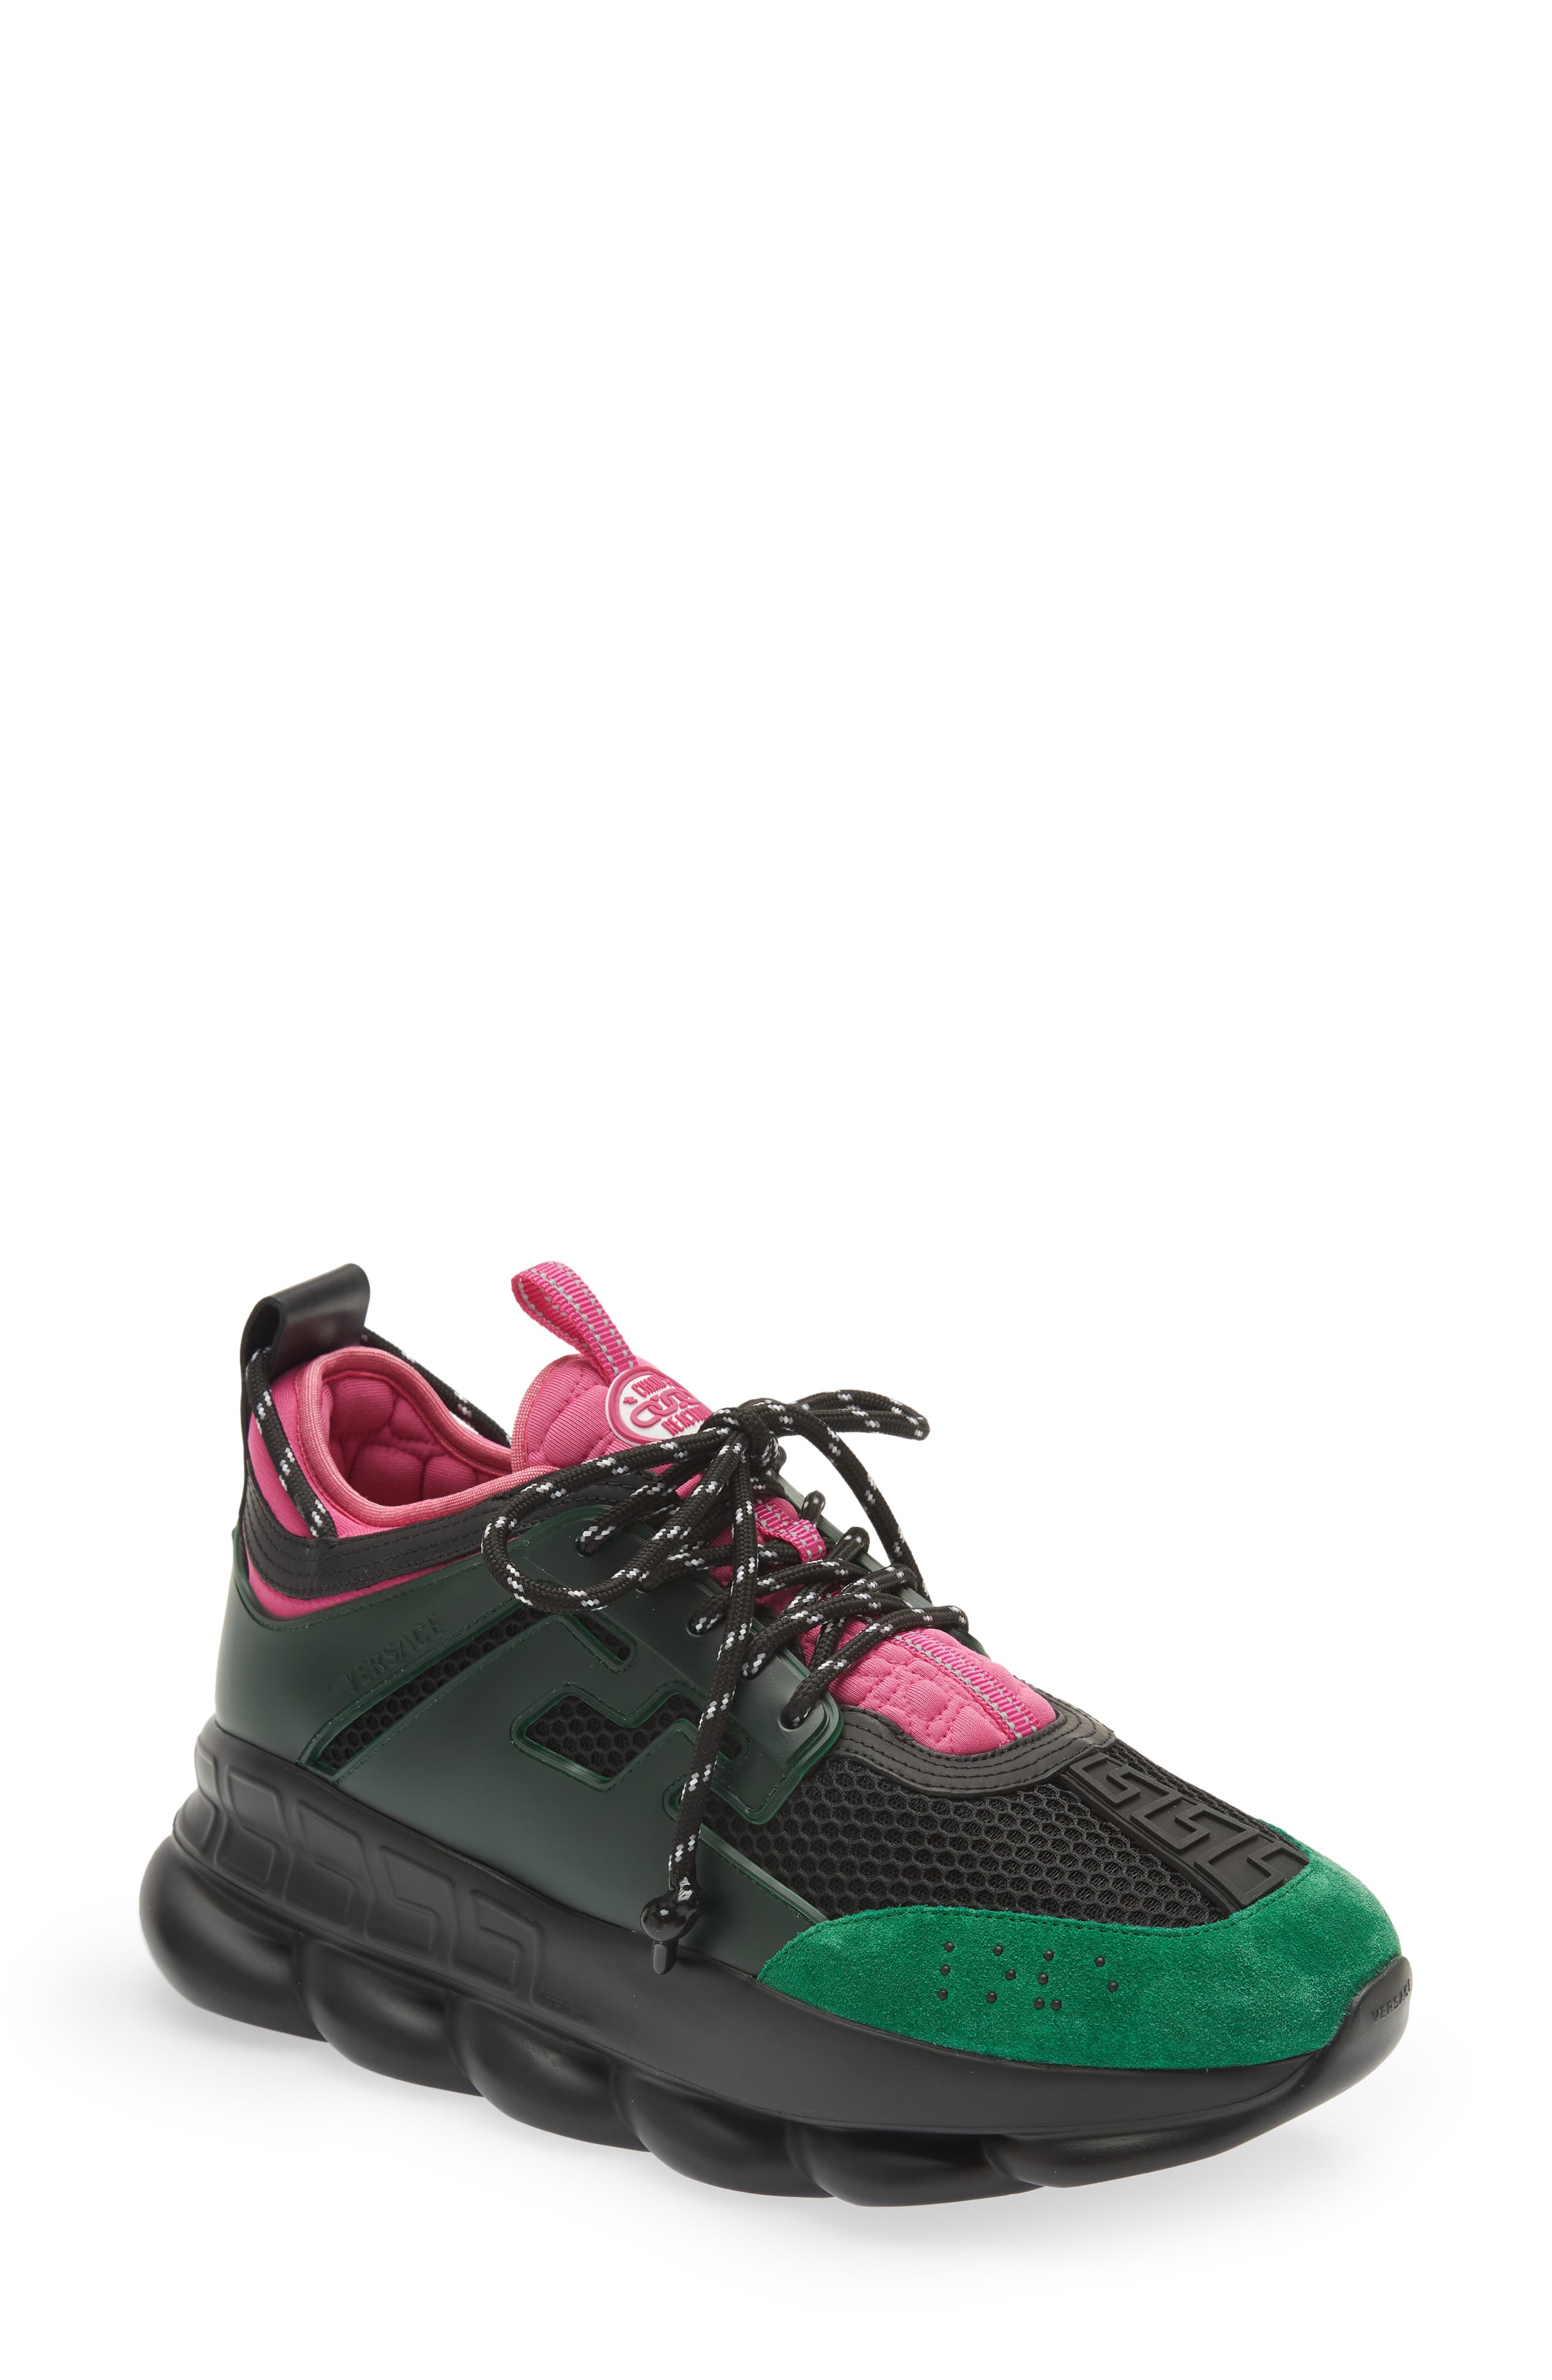 VERSACE Chain Reaction Sneaker in Emerald Black Cerise